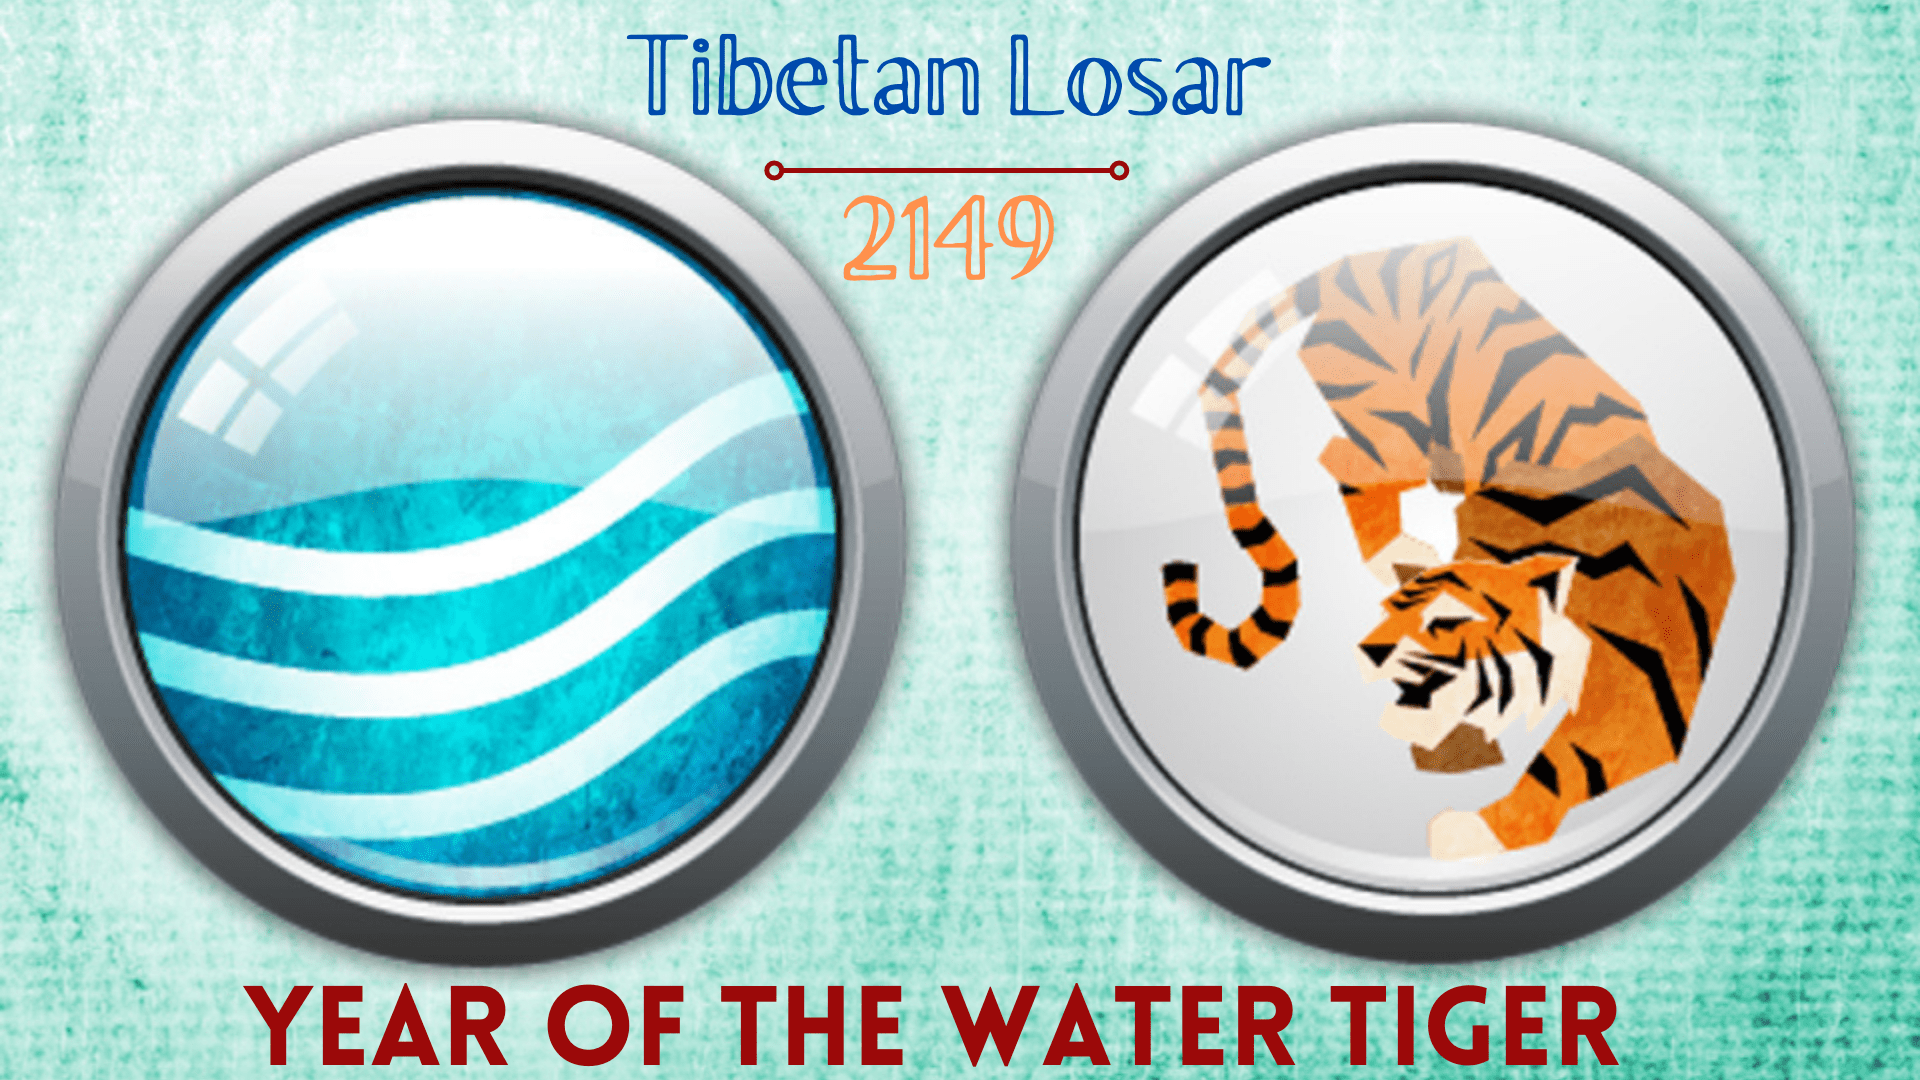 Tibetan Calendar 2022 Tibetan New Year 2022 - Year Of The Water Tiger - Tibetan Losar 2149